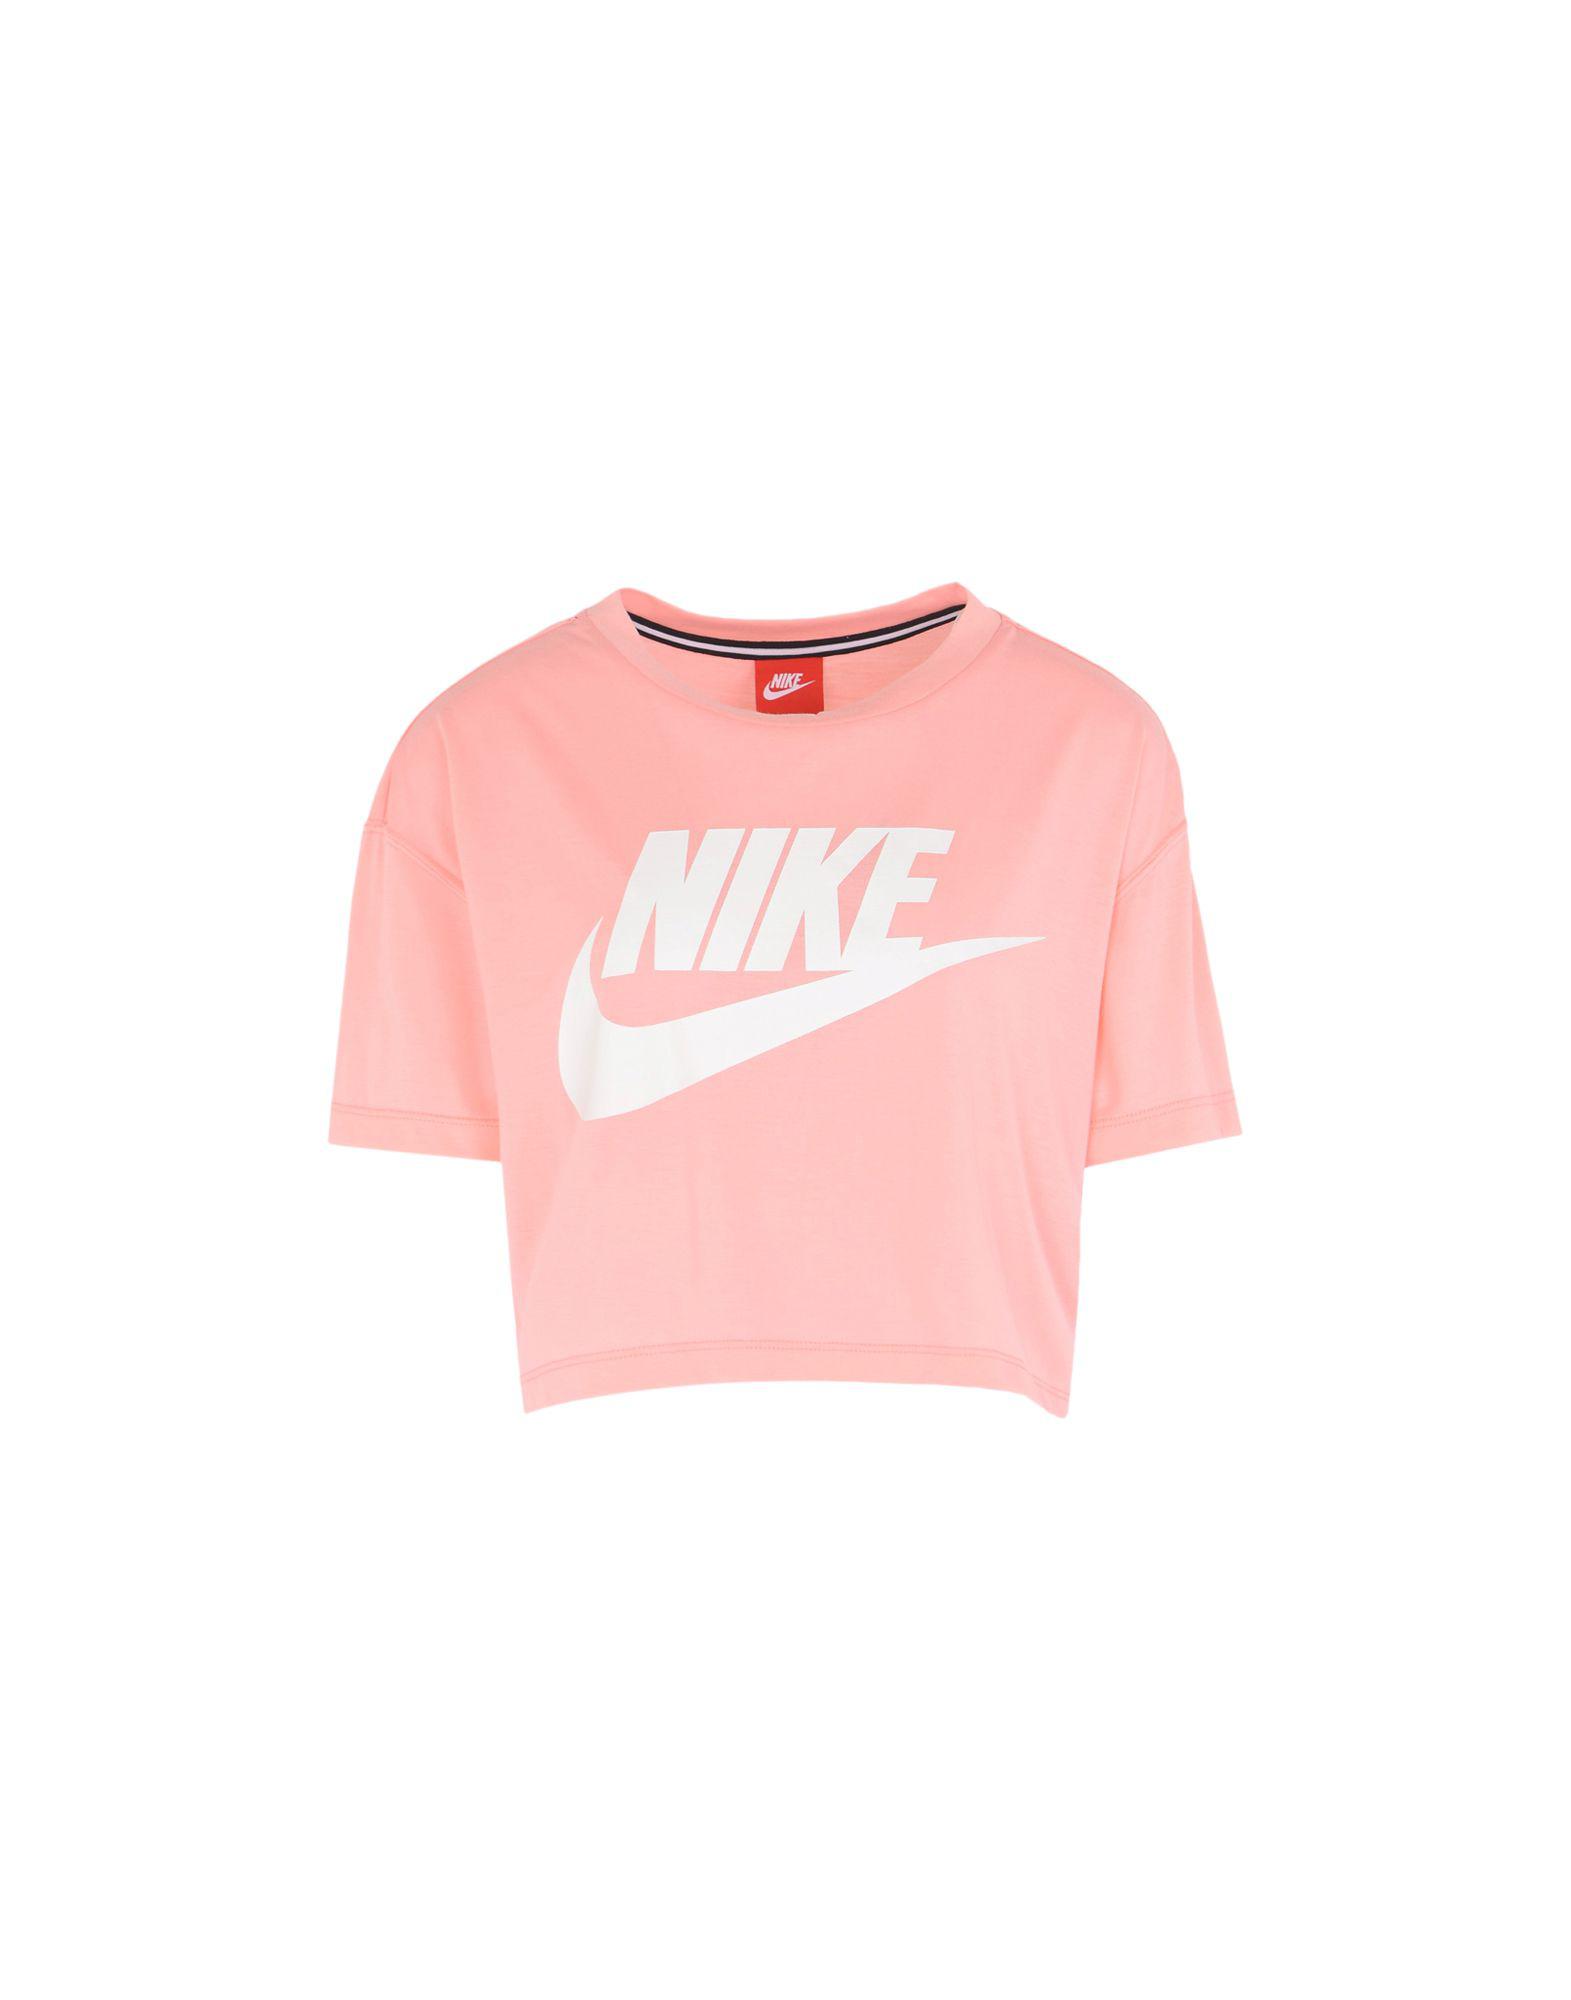 nike light pink shirt